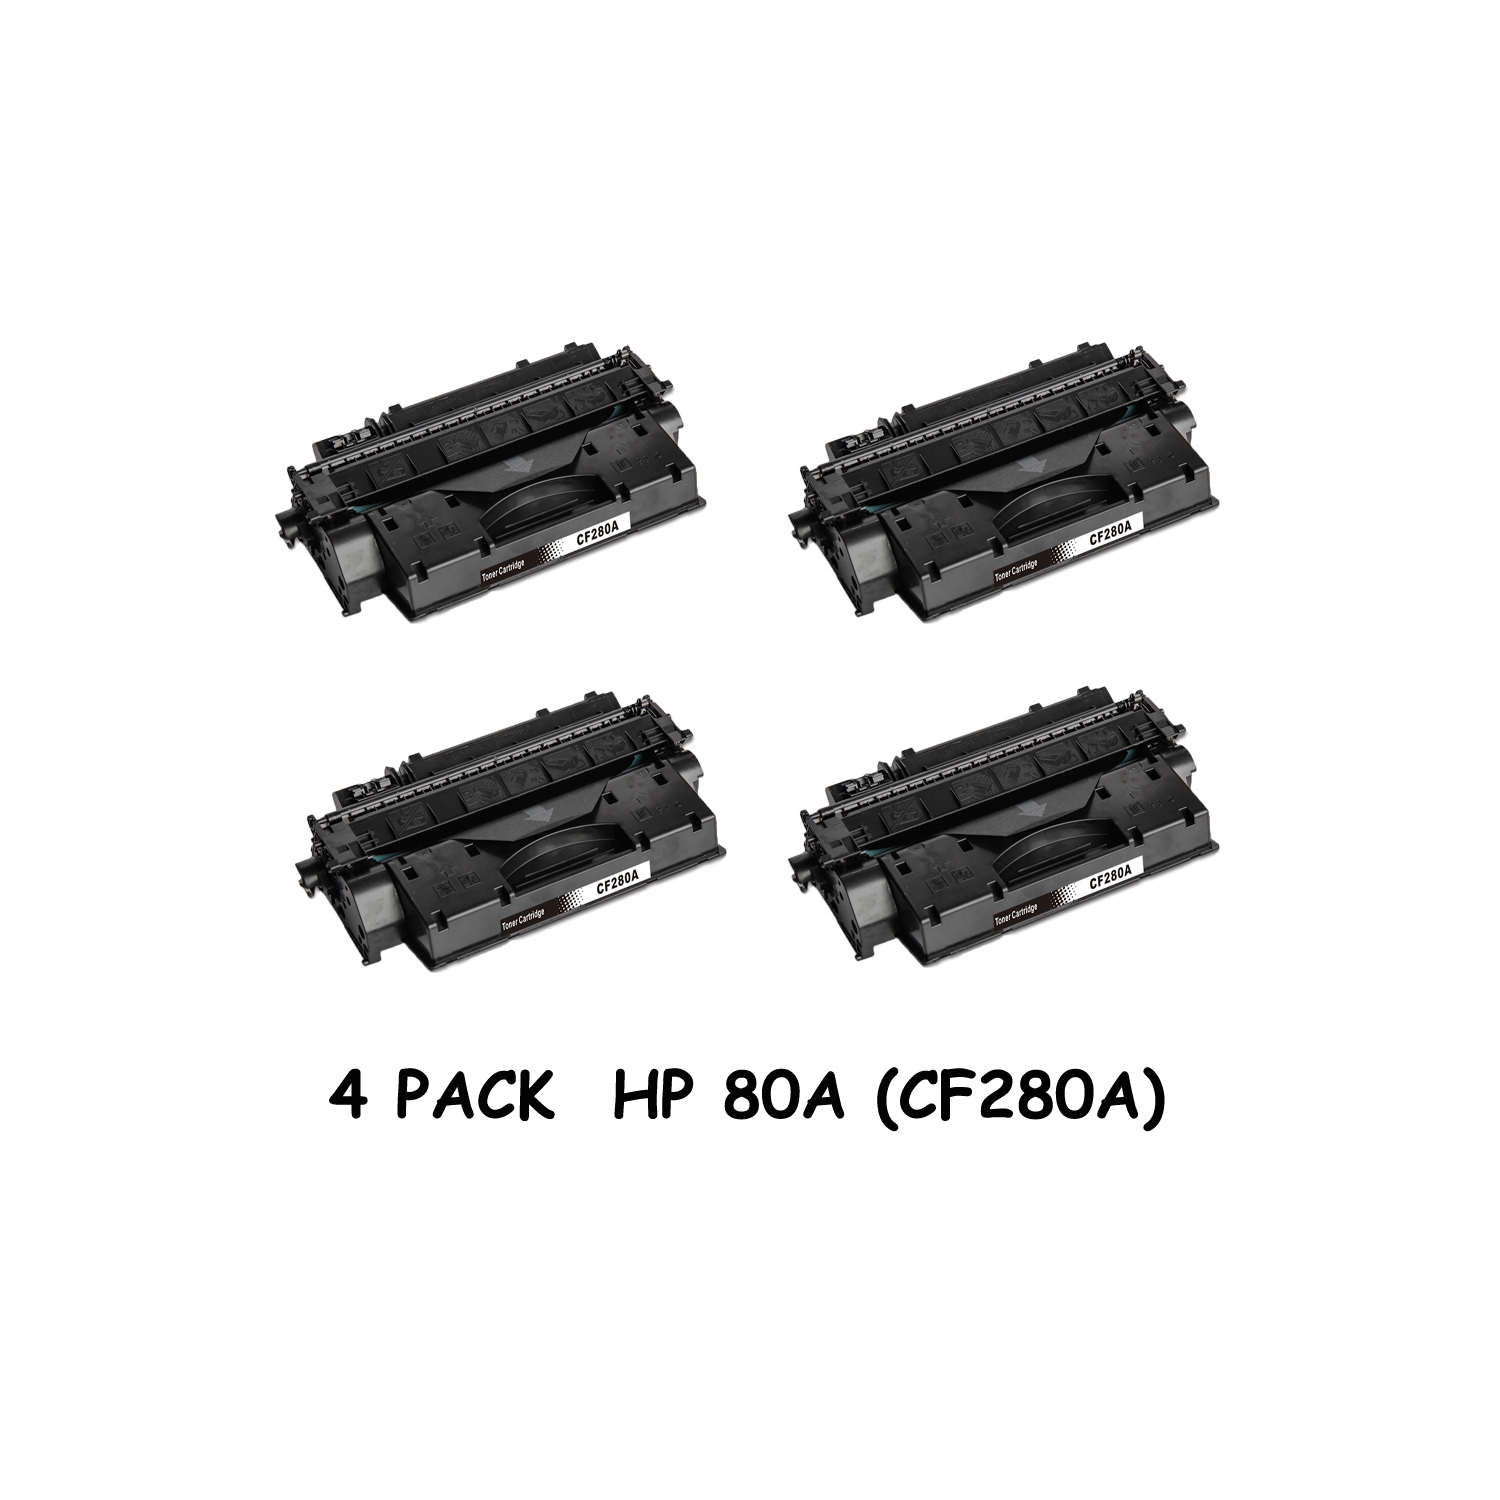 Bestoner™ 4 PK HP 80A (CF280A)/hp80a/80a/HP80A/80A/CF280A/cf280a/cf280/280/80A/80 HP LaserJet Pro M401 M425d